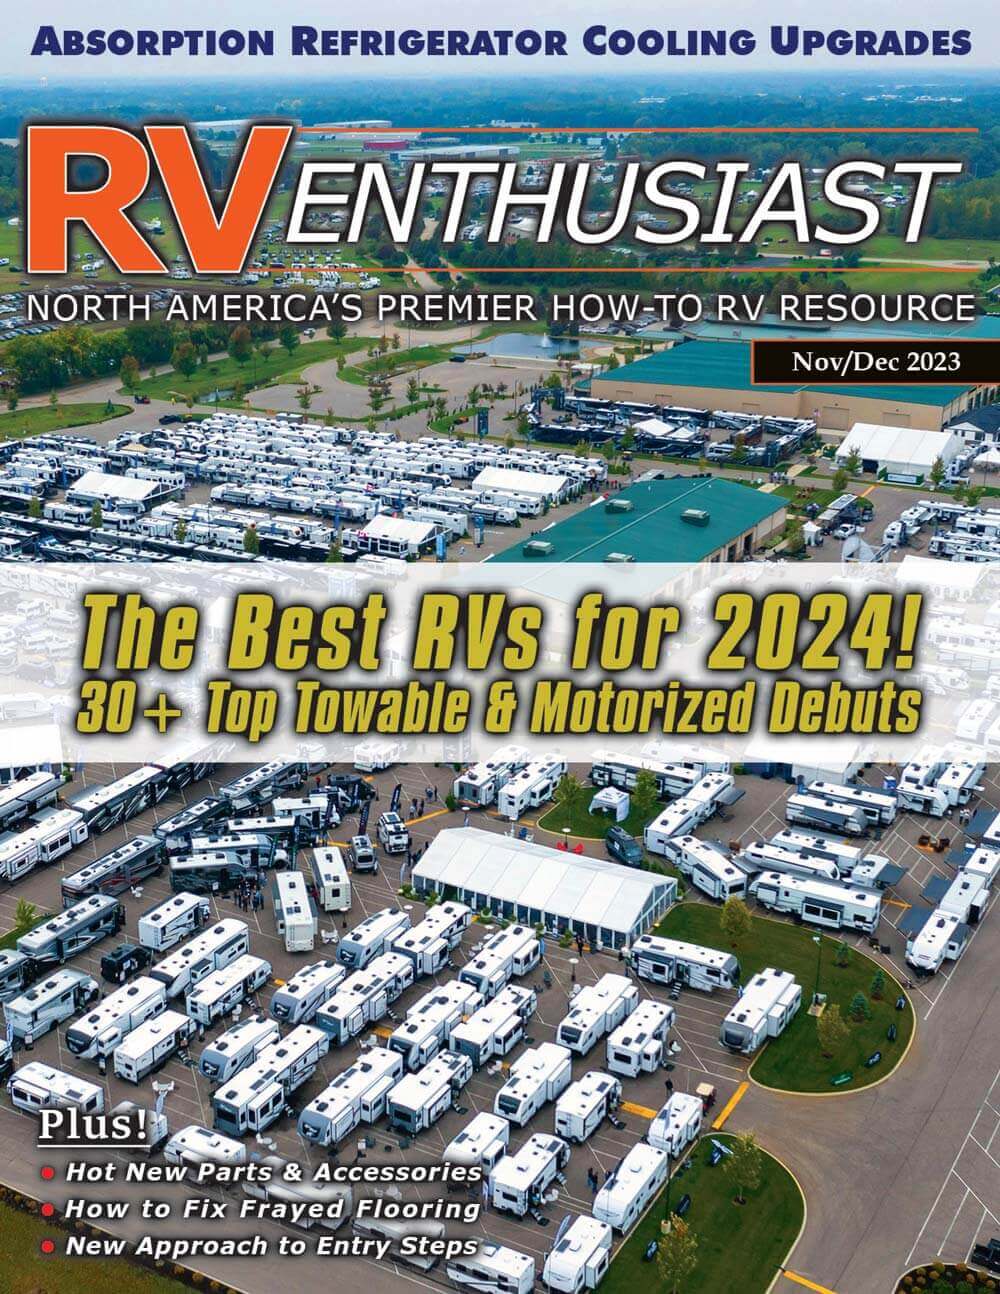 RV magazine cover showcasing 2024 top recreational vehicles.